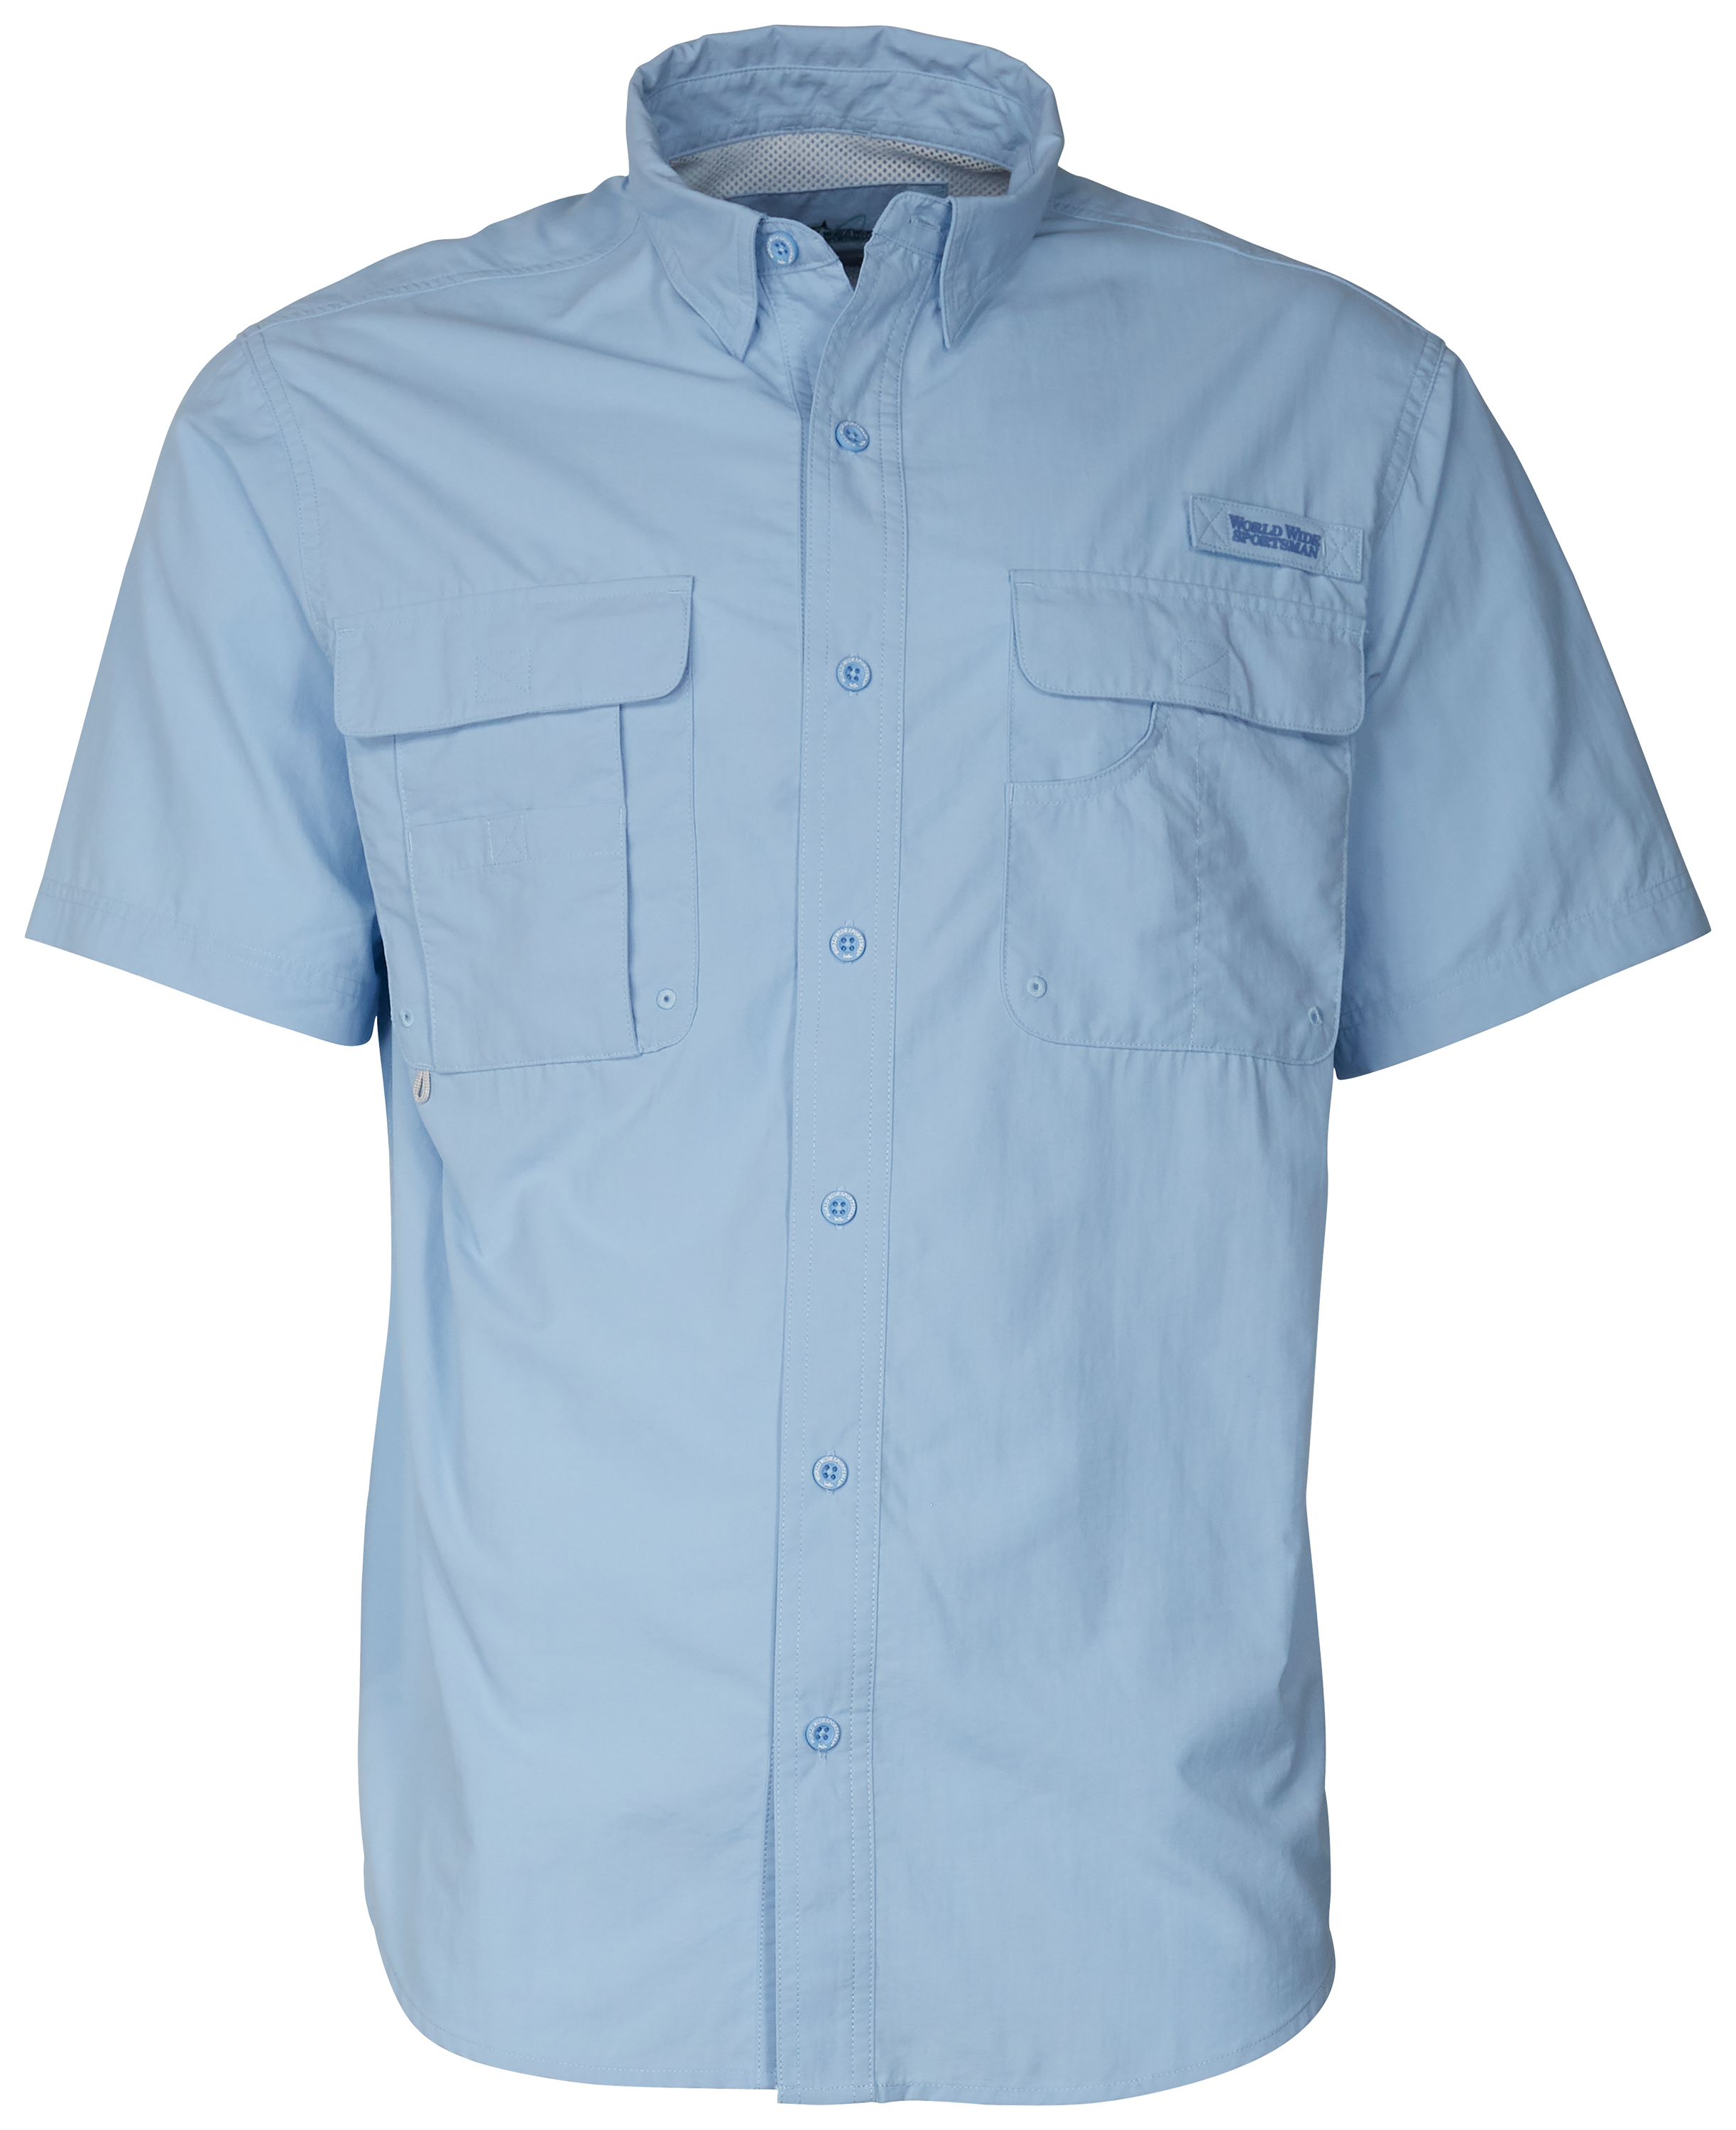 World Wide Sportsman Recycled-Nylon Angler 2.0 Short-Sleeve Button-Down Shirt for Men - Placid Blue - S